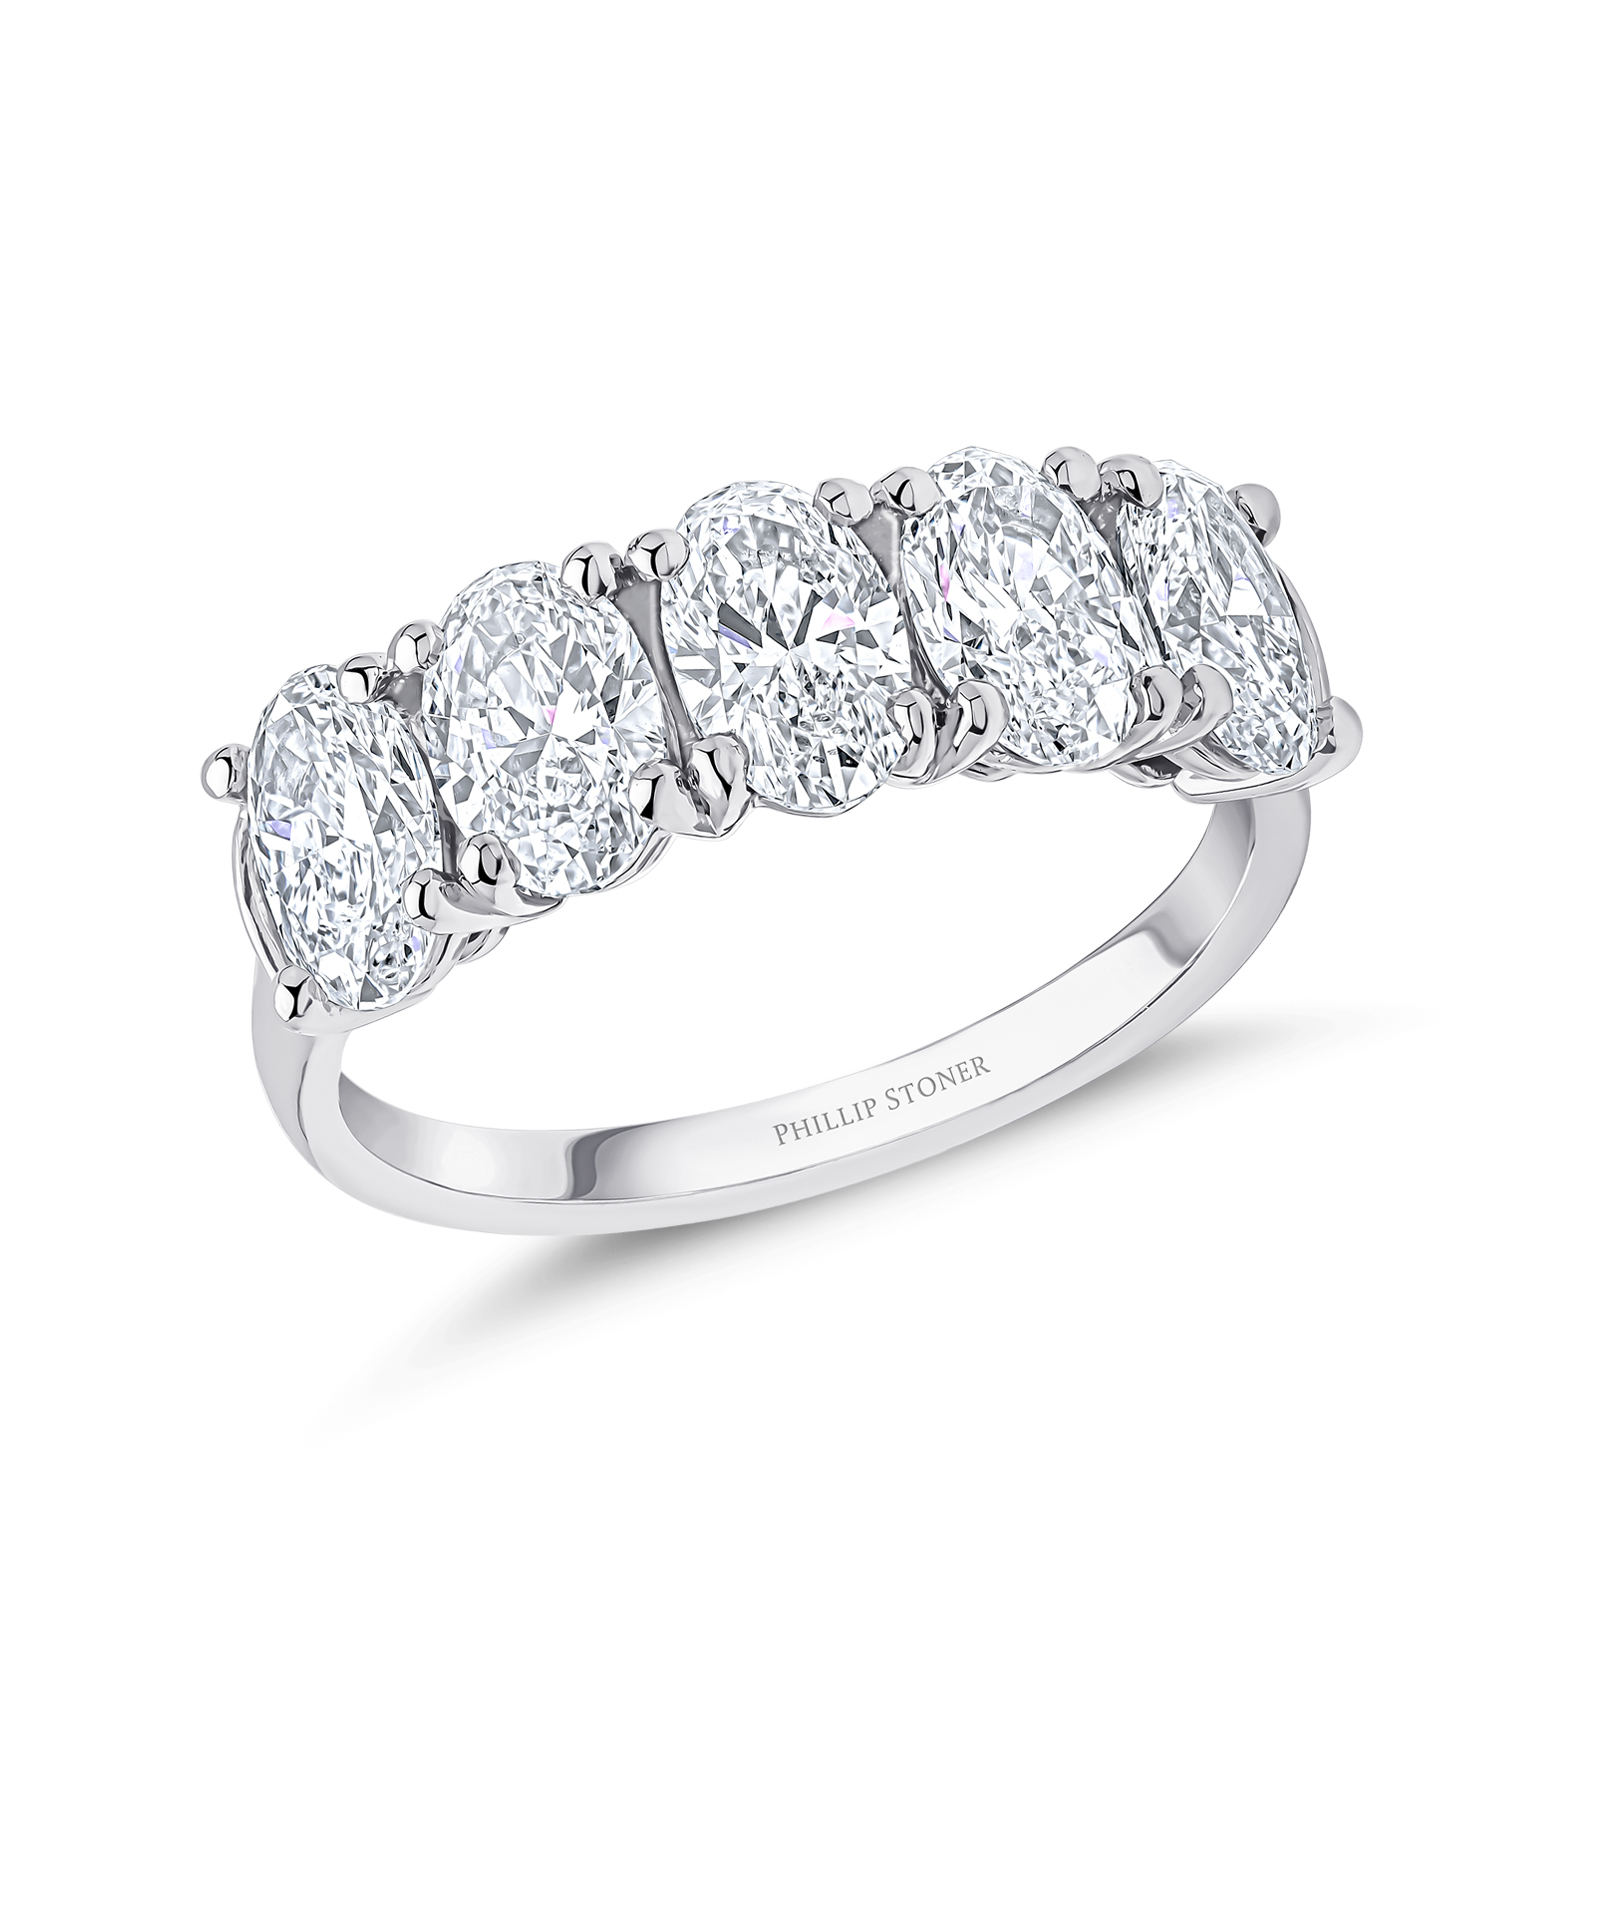 Platinum 2.50ct 5-Stone Oval Cut Diamond Ring - Phillip Stoner The Jeweller